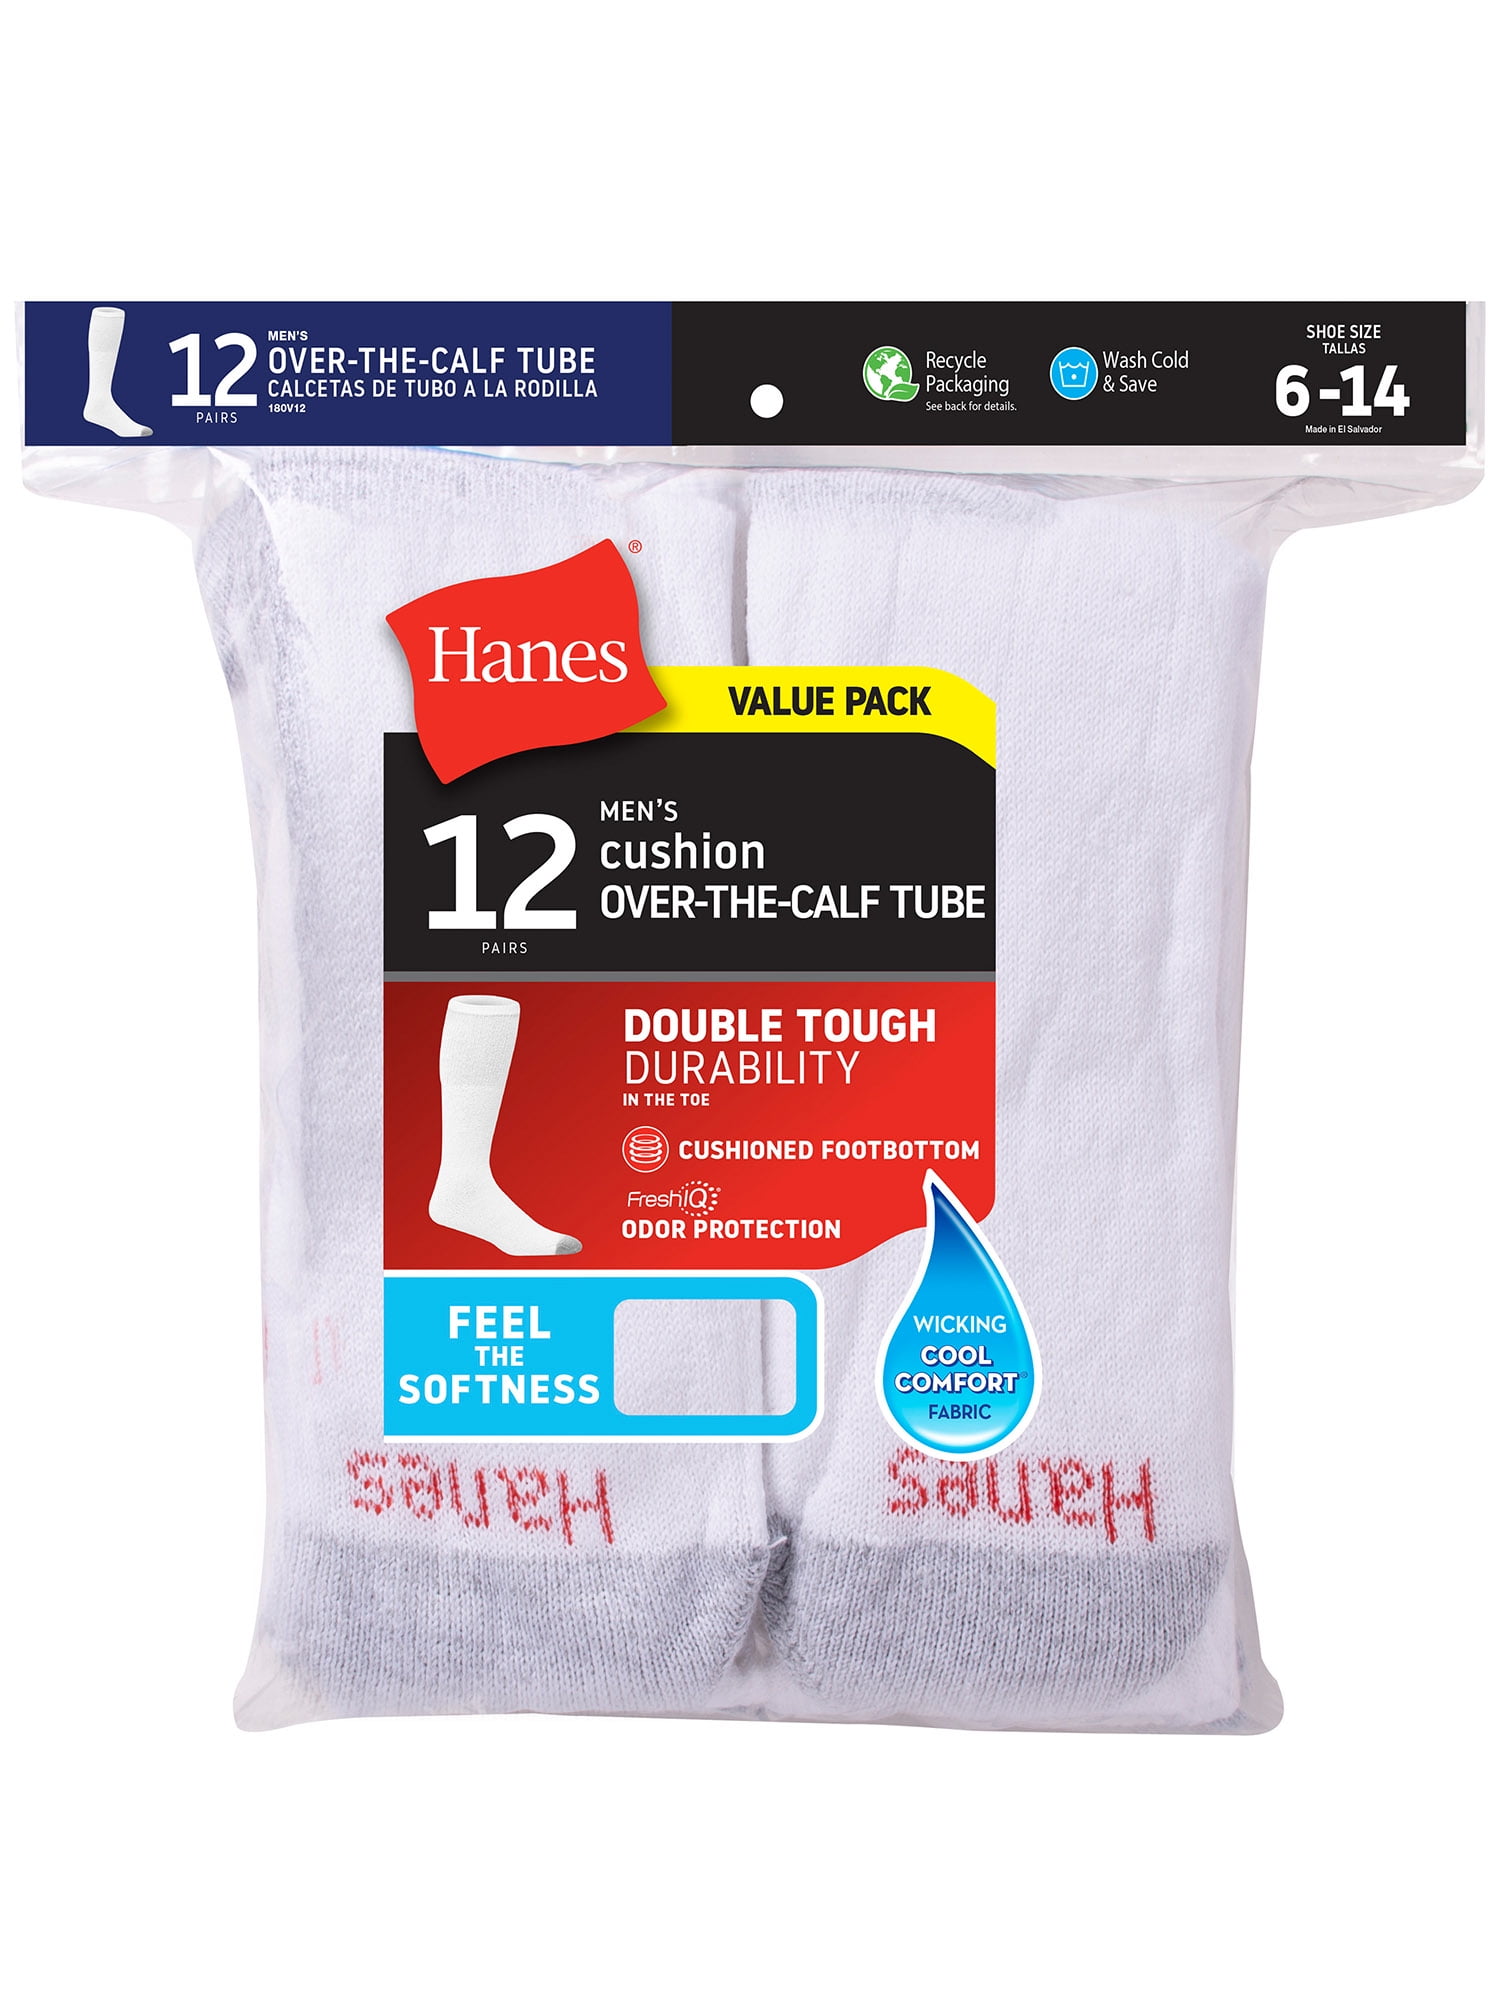 Hanes Men's Double Tough Durability Over-the-Calf Tube Socks, 12-Pack